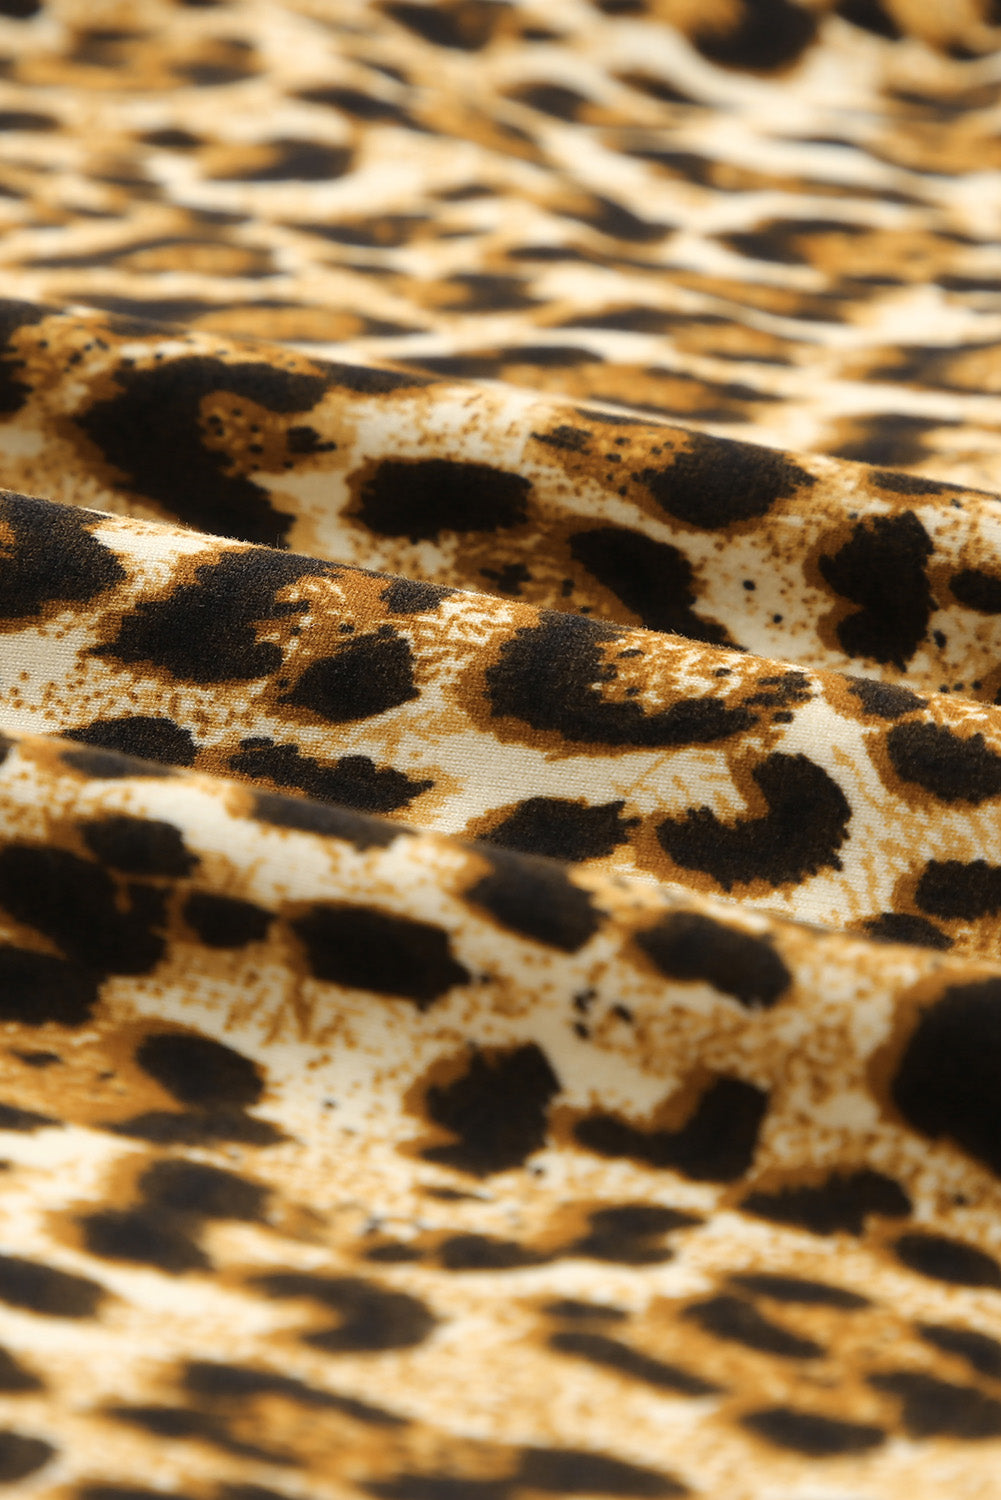 Leopard Print Short Sleeve A-line Mini Dress